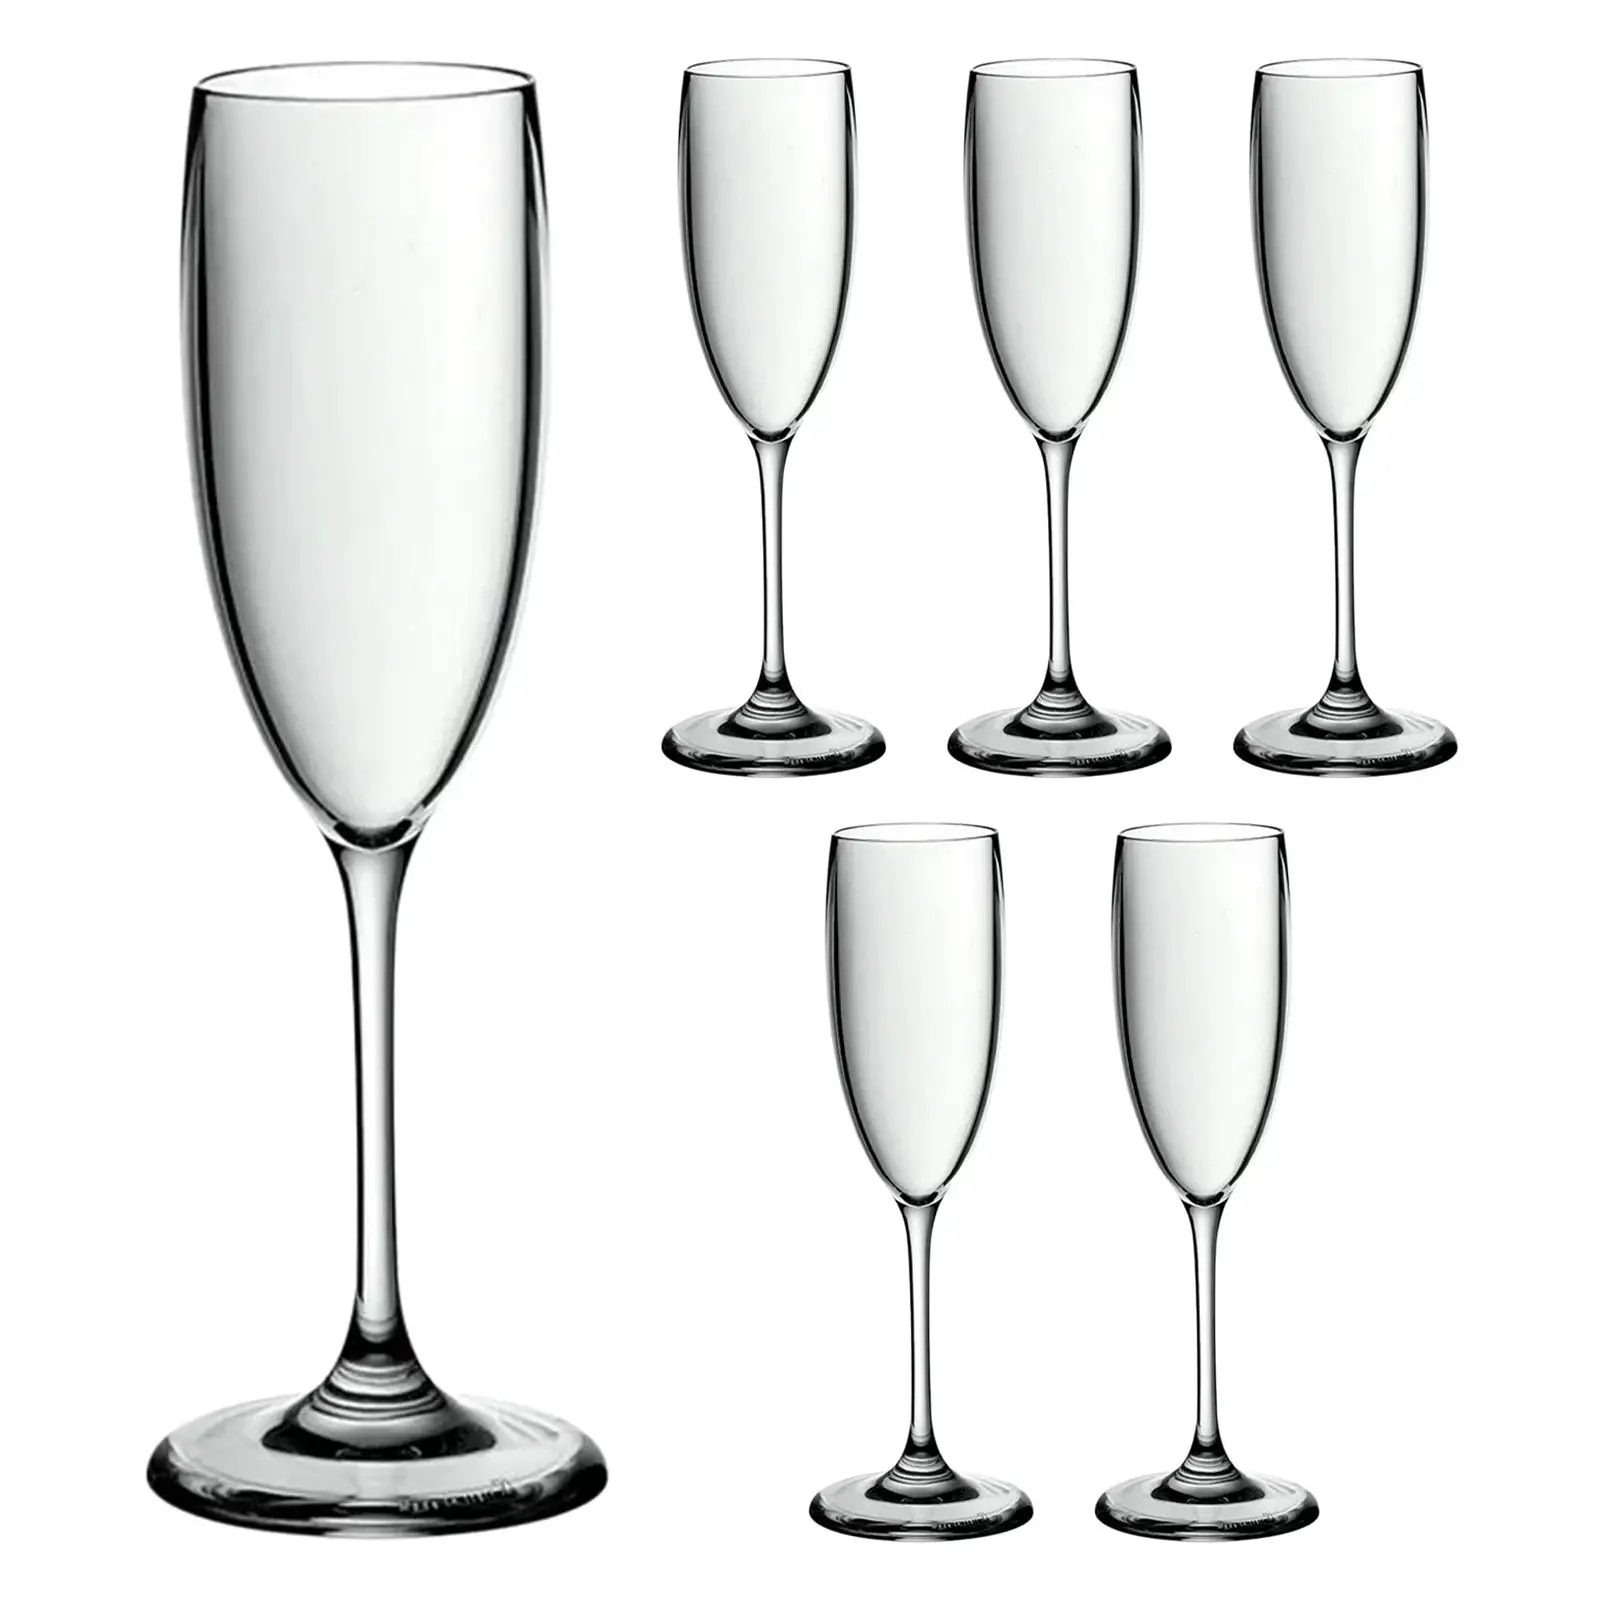 Tiffany Happy Hour Champagne Flutes (Set of 6) by Guzzini